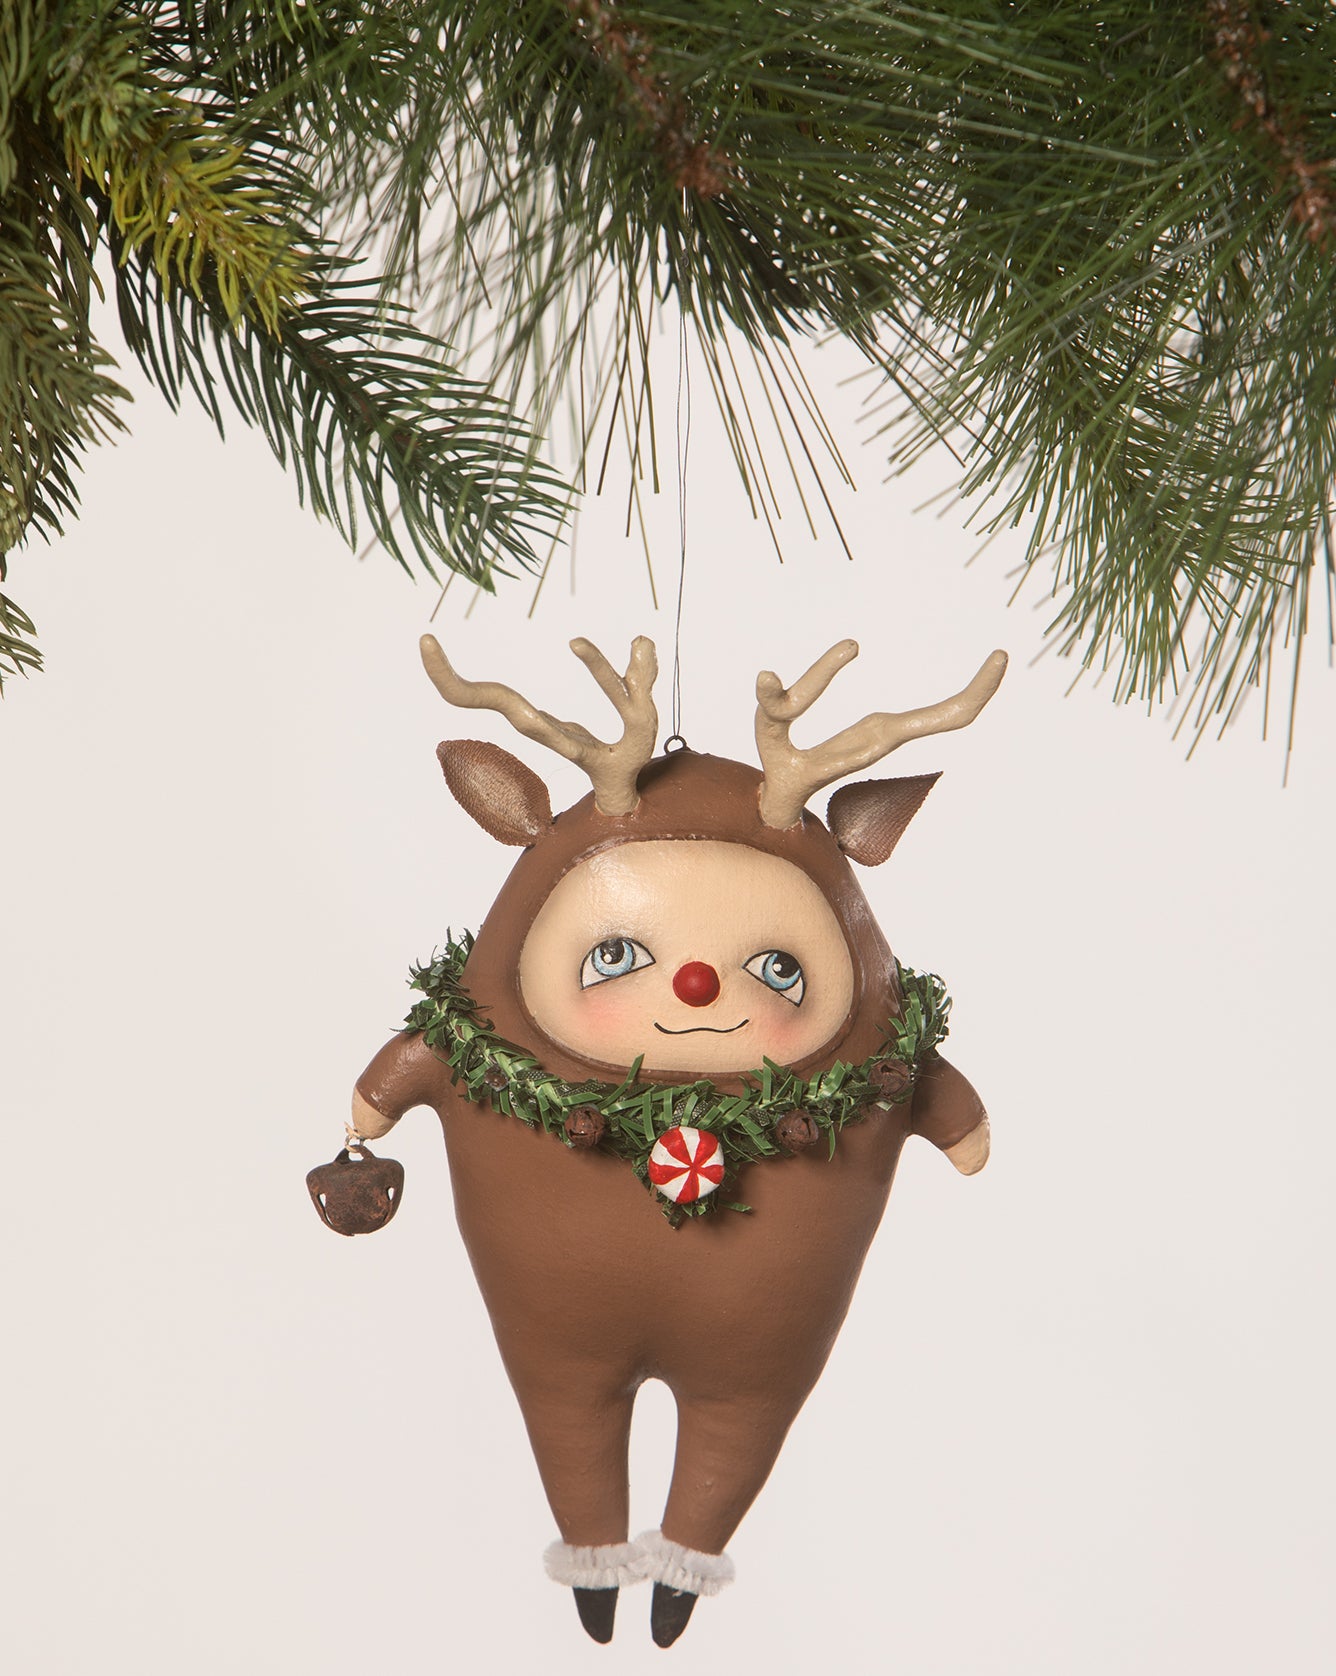 Rudy Reindeer Ornament by Robin Seeber